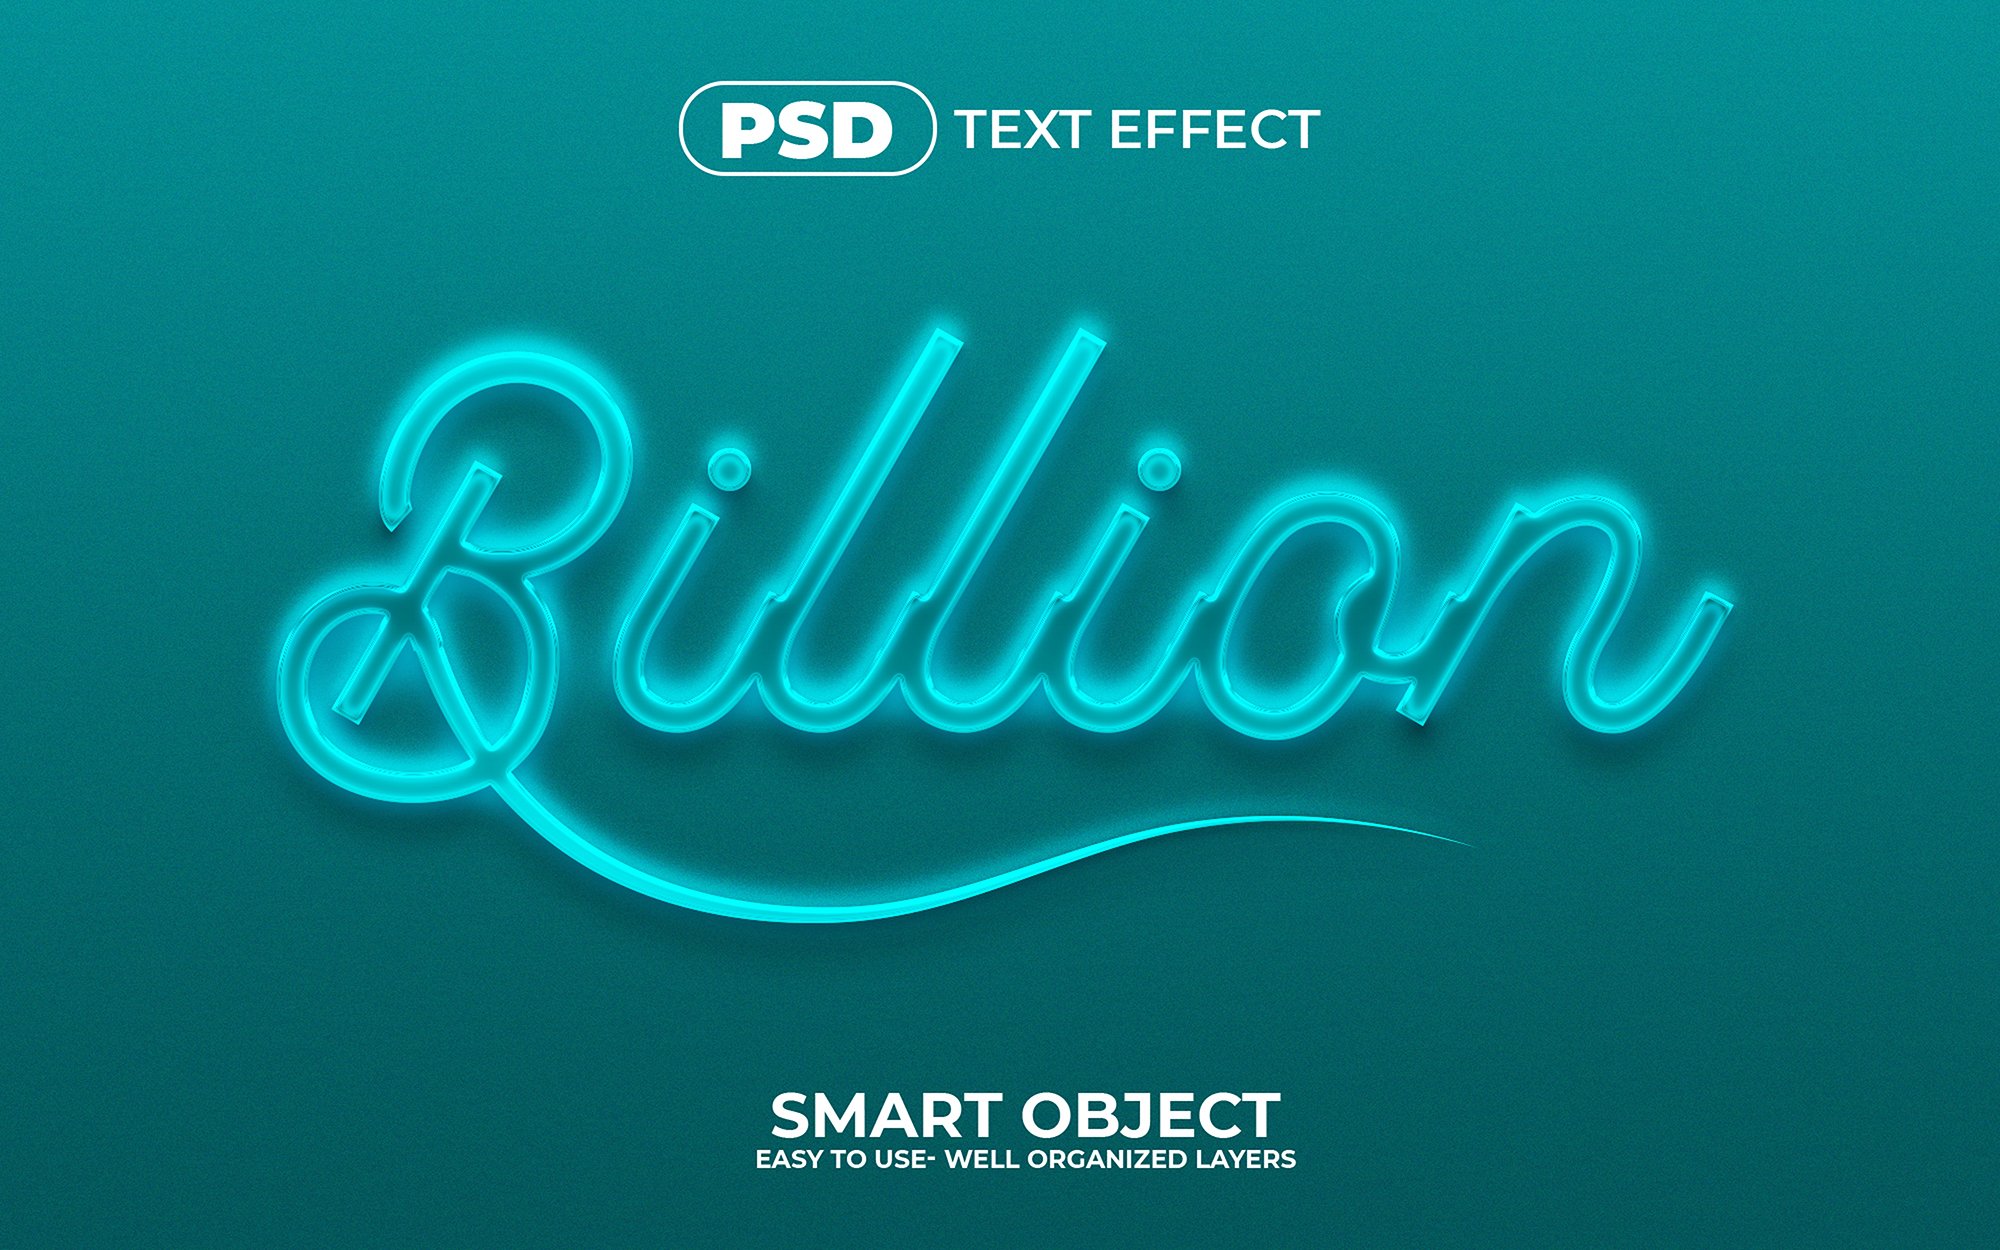 Billion 3d Editable Text Effectcover image.